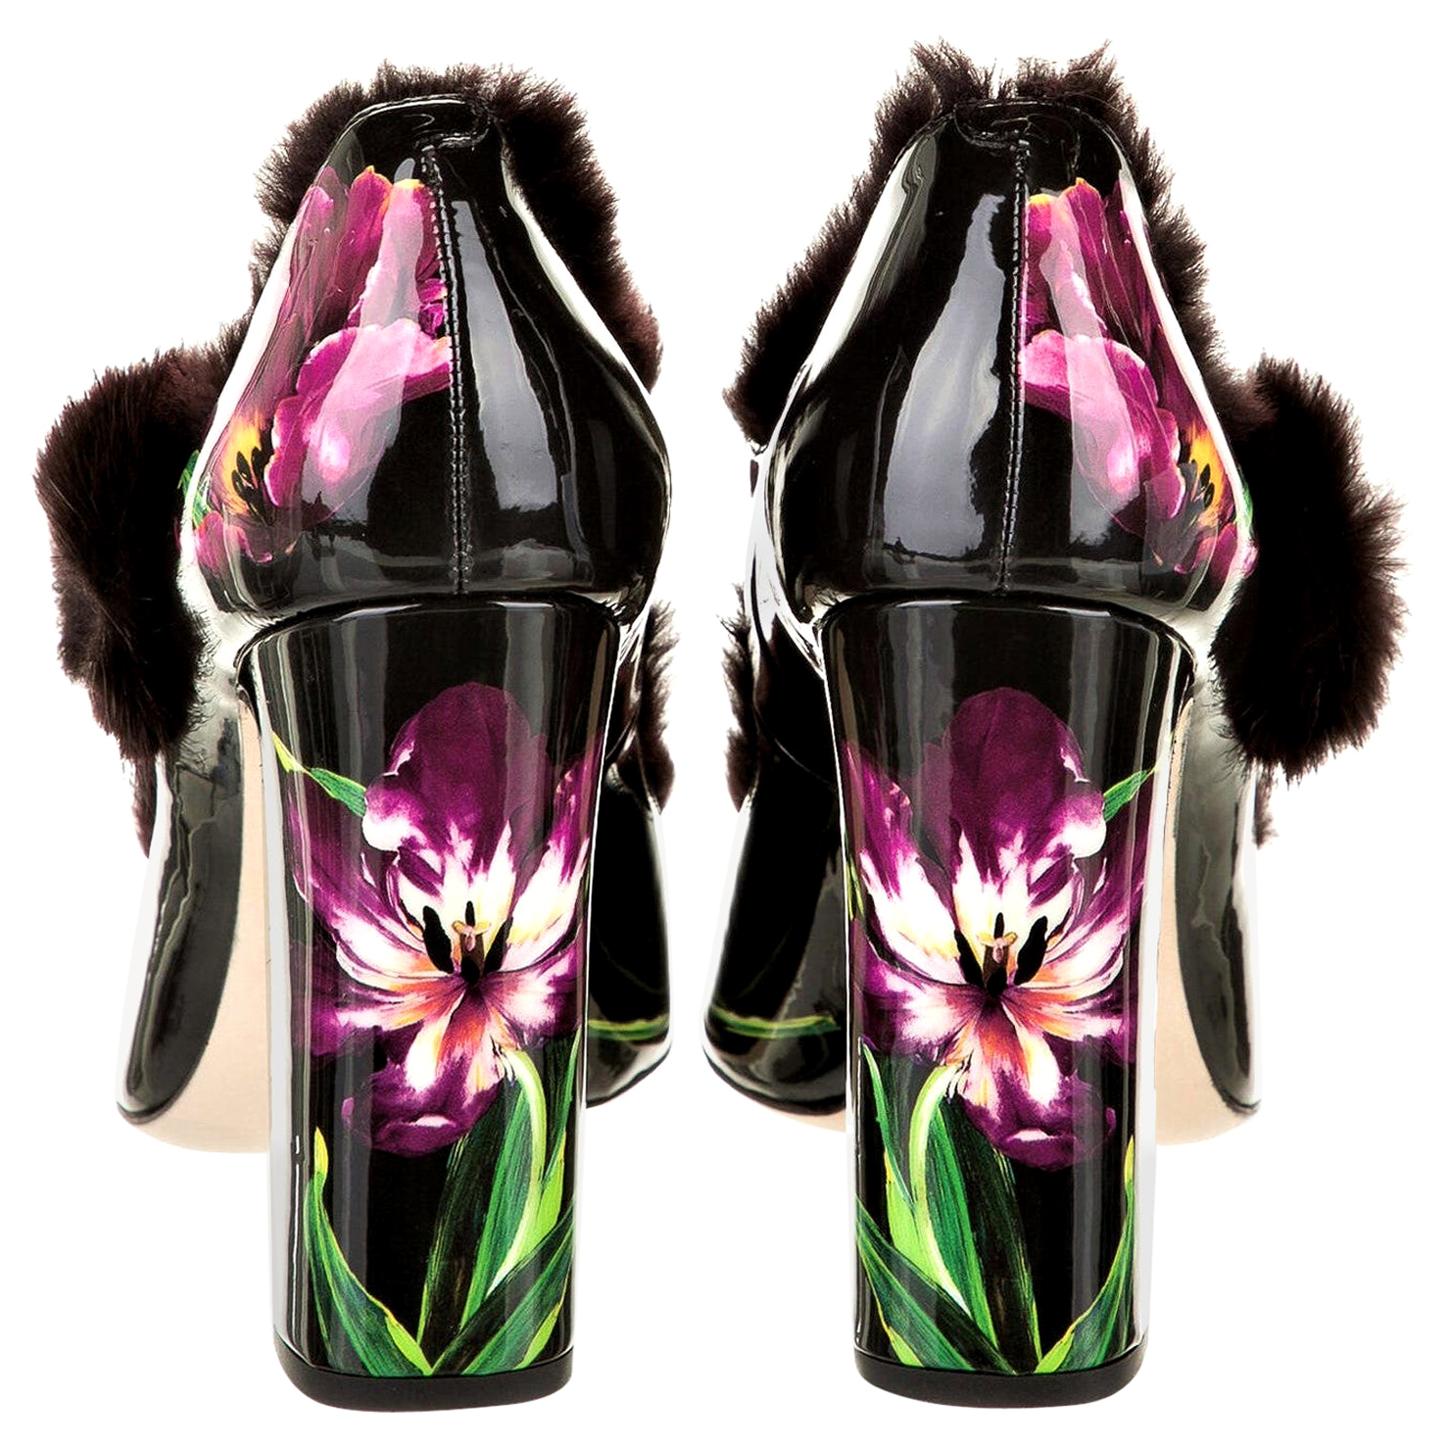 New Dolce & Gabbana Patent Leather Mink Pumps Heels Fall 2016 Sz 38.5